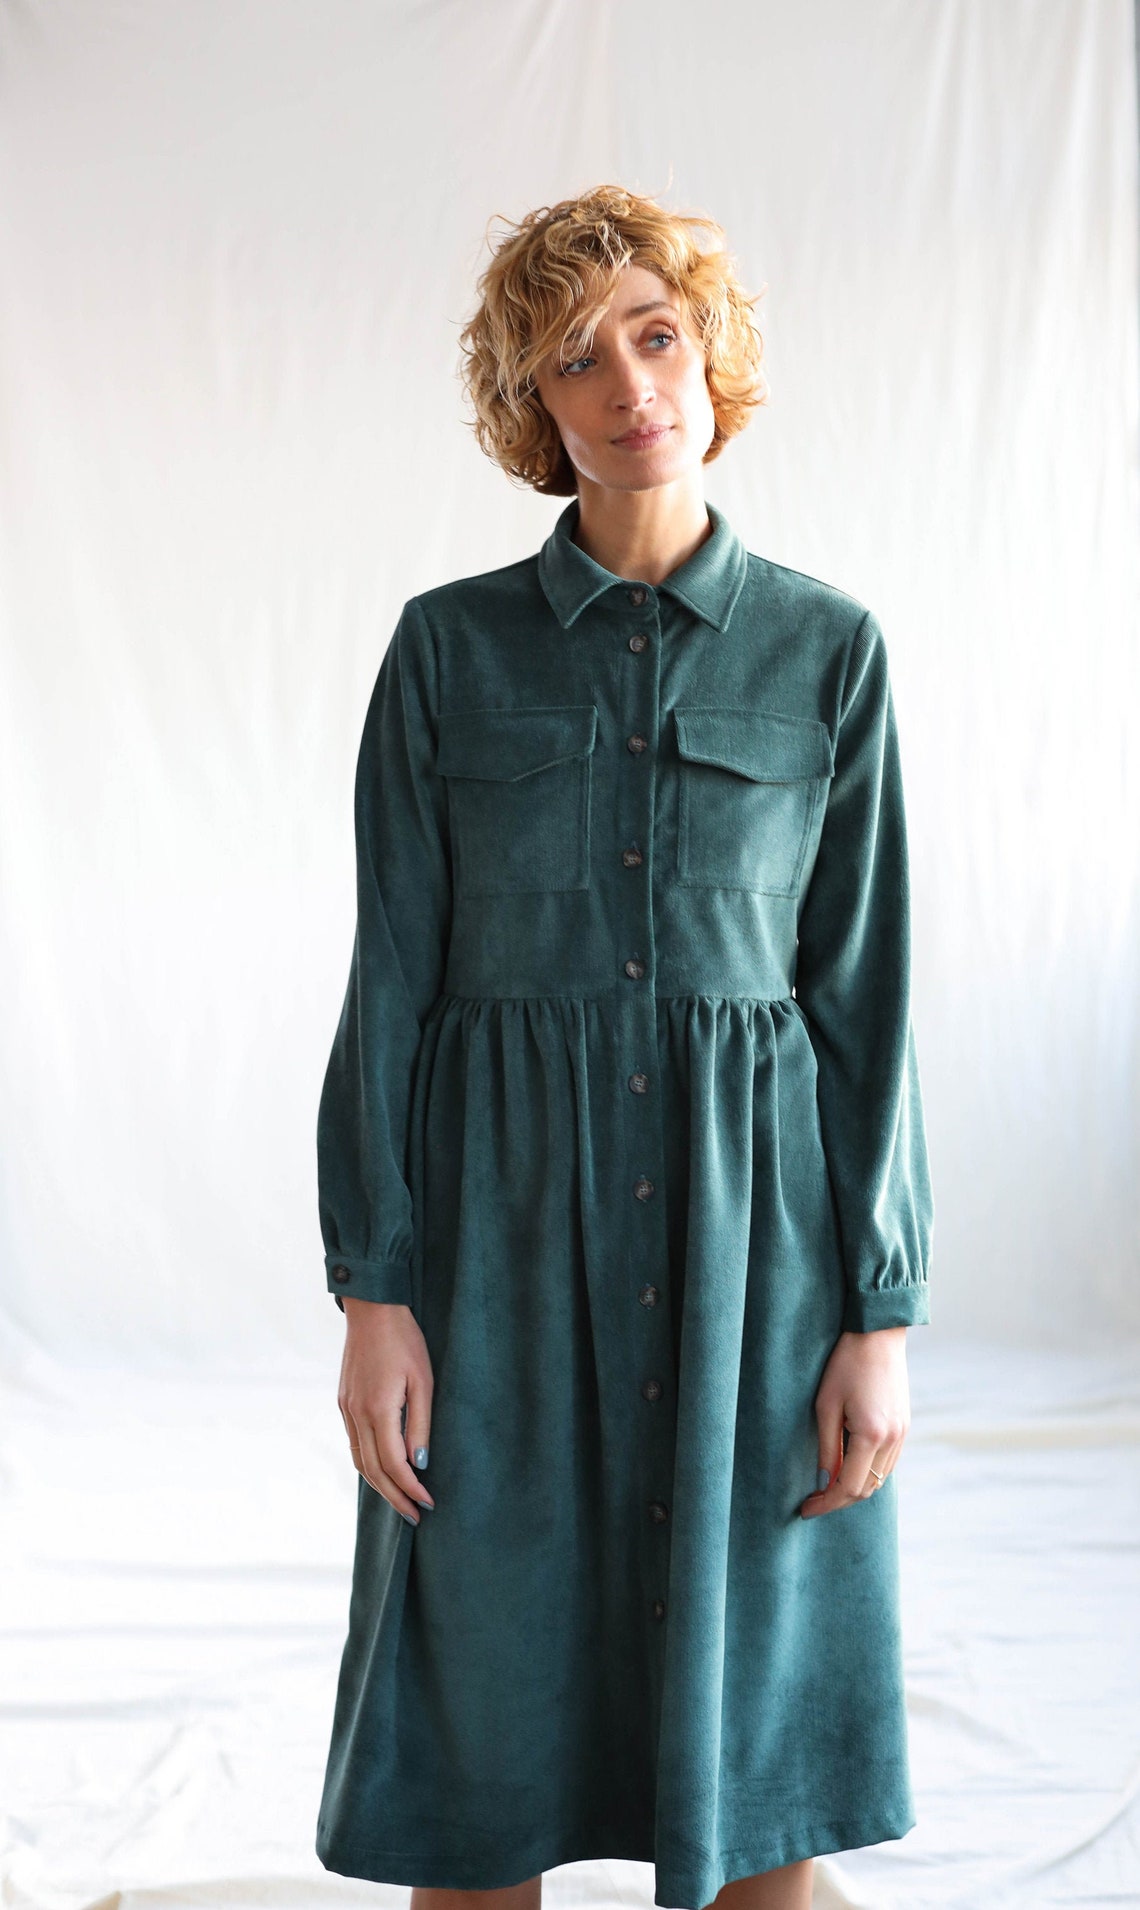 Needlecord Ruffled Skirt Dress in Petrol Color OFFON - Etsy